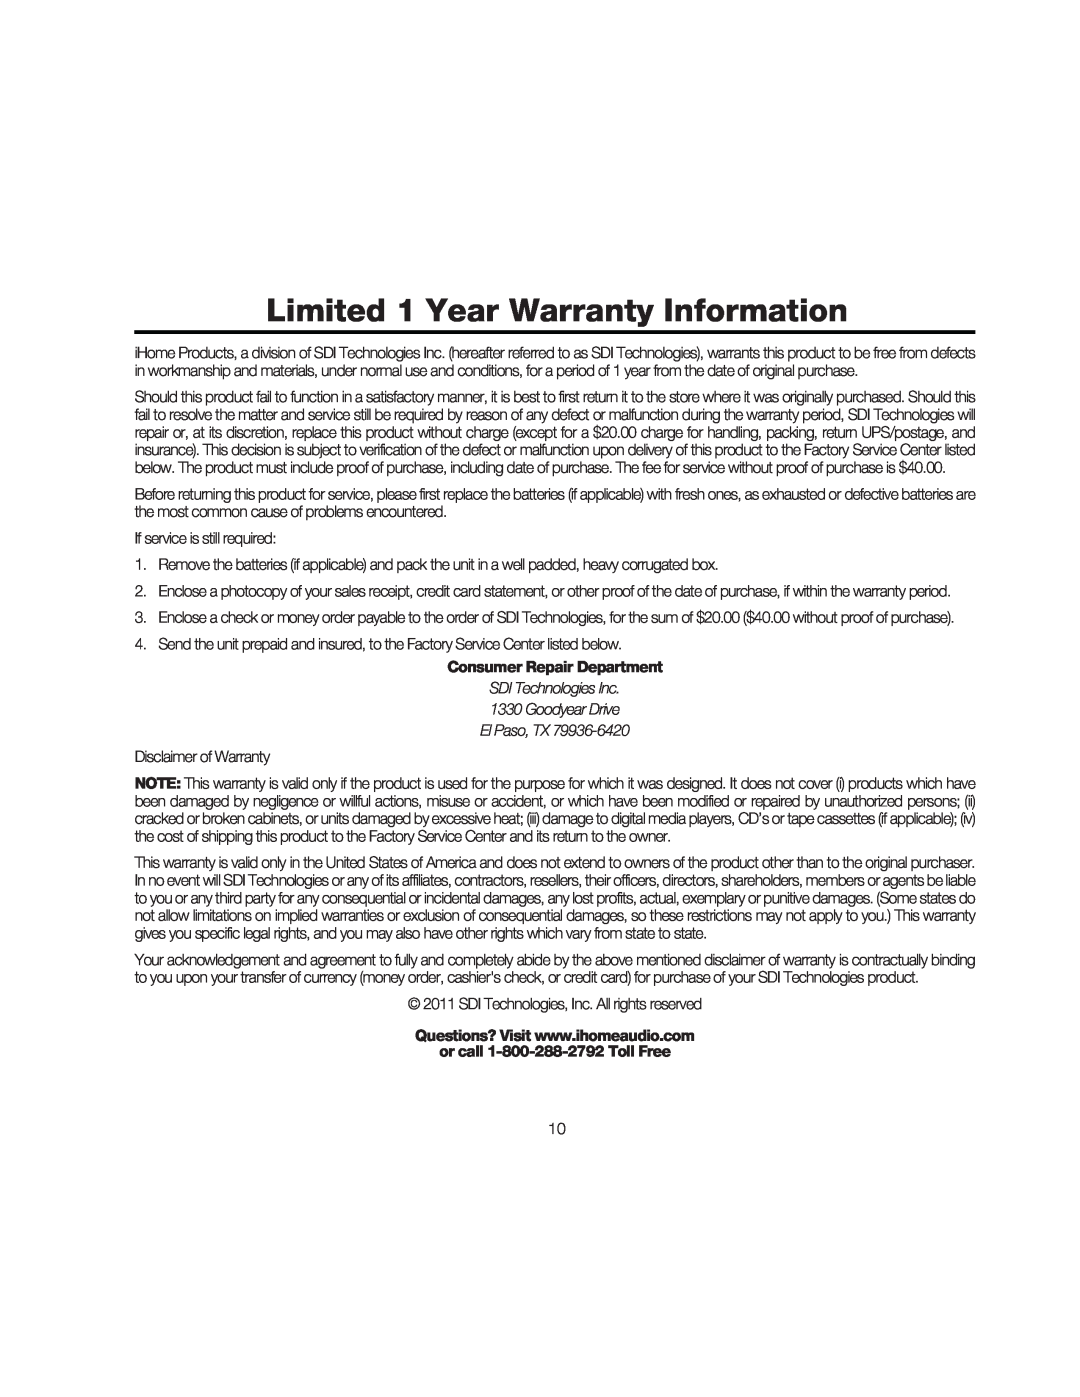 iHome iA17 instruction manual SDI Technologies Inc 1330 Goodyear Drive El Paso, TX, Limited 1 Year Warranty Information 